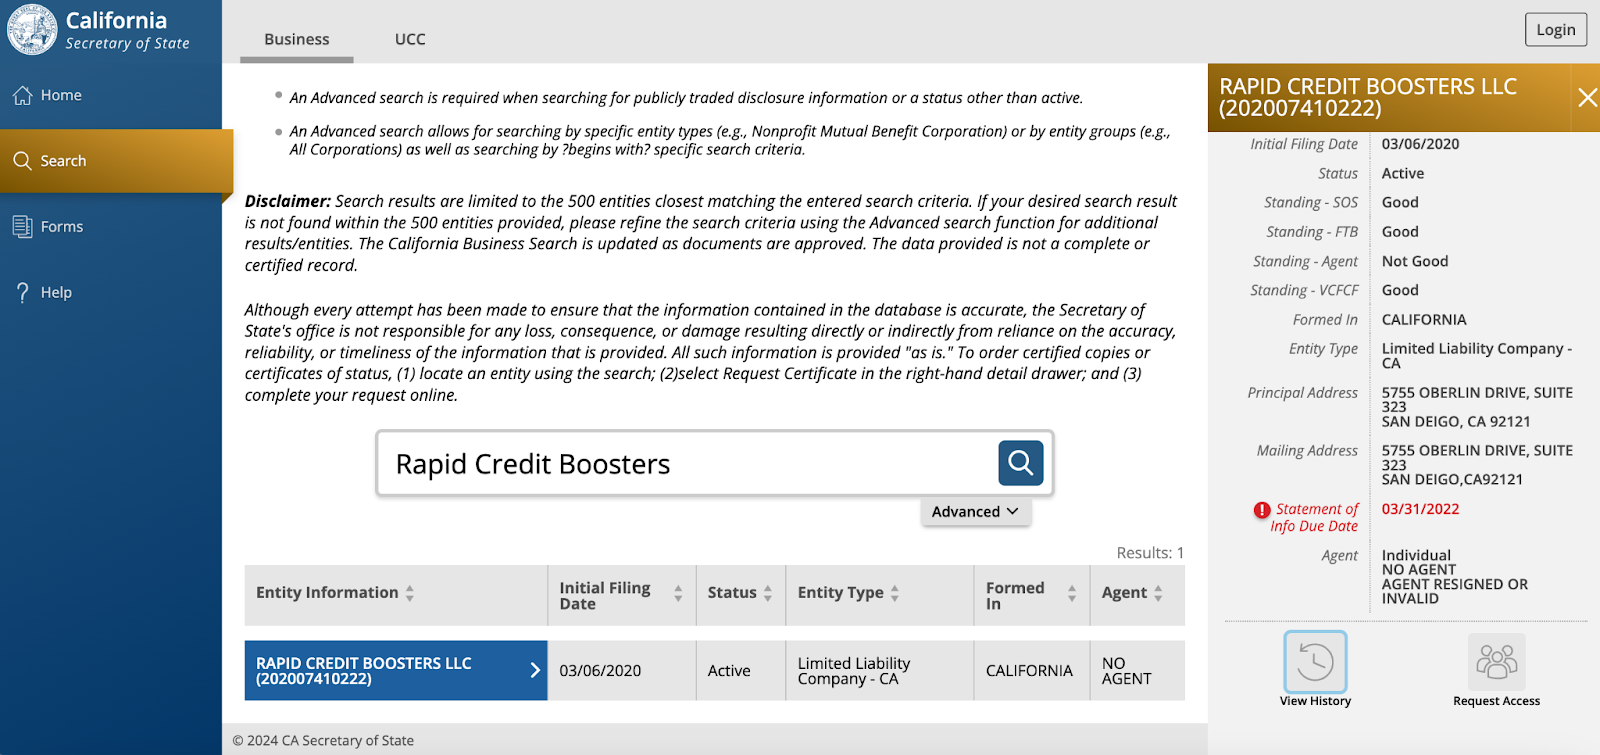 Rapid Credit Boosters LLC
